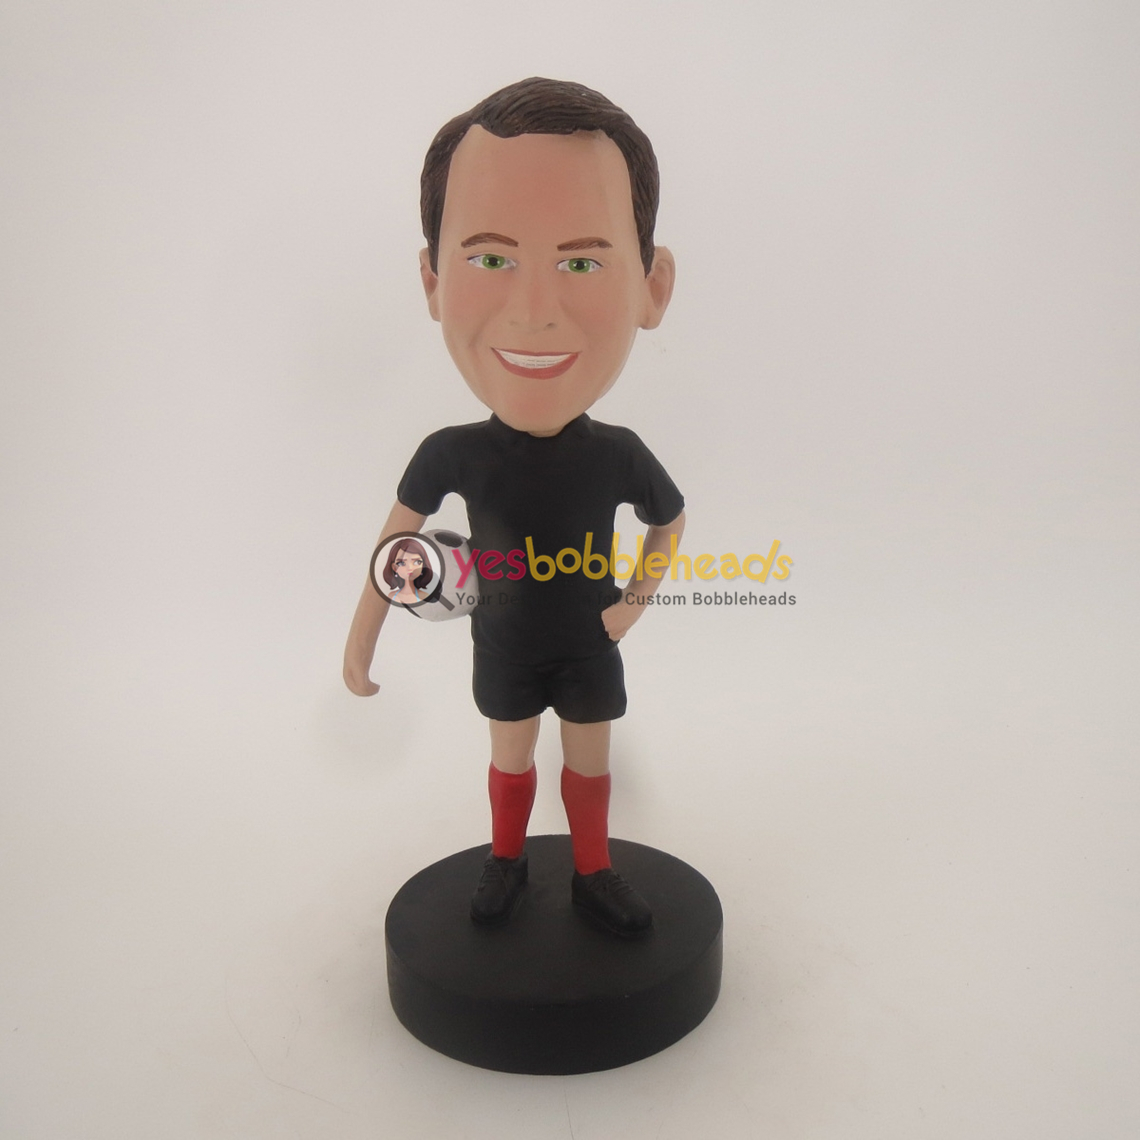 Picture of Custom Bobblehead Doll: Man Holding Soccer